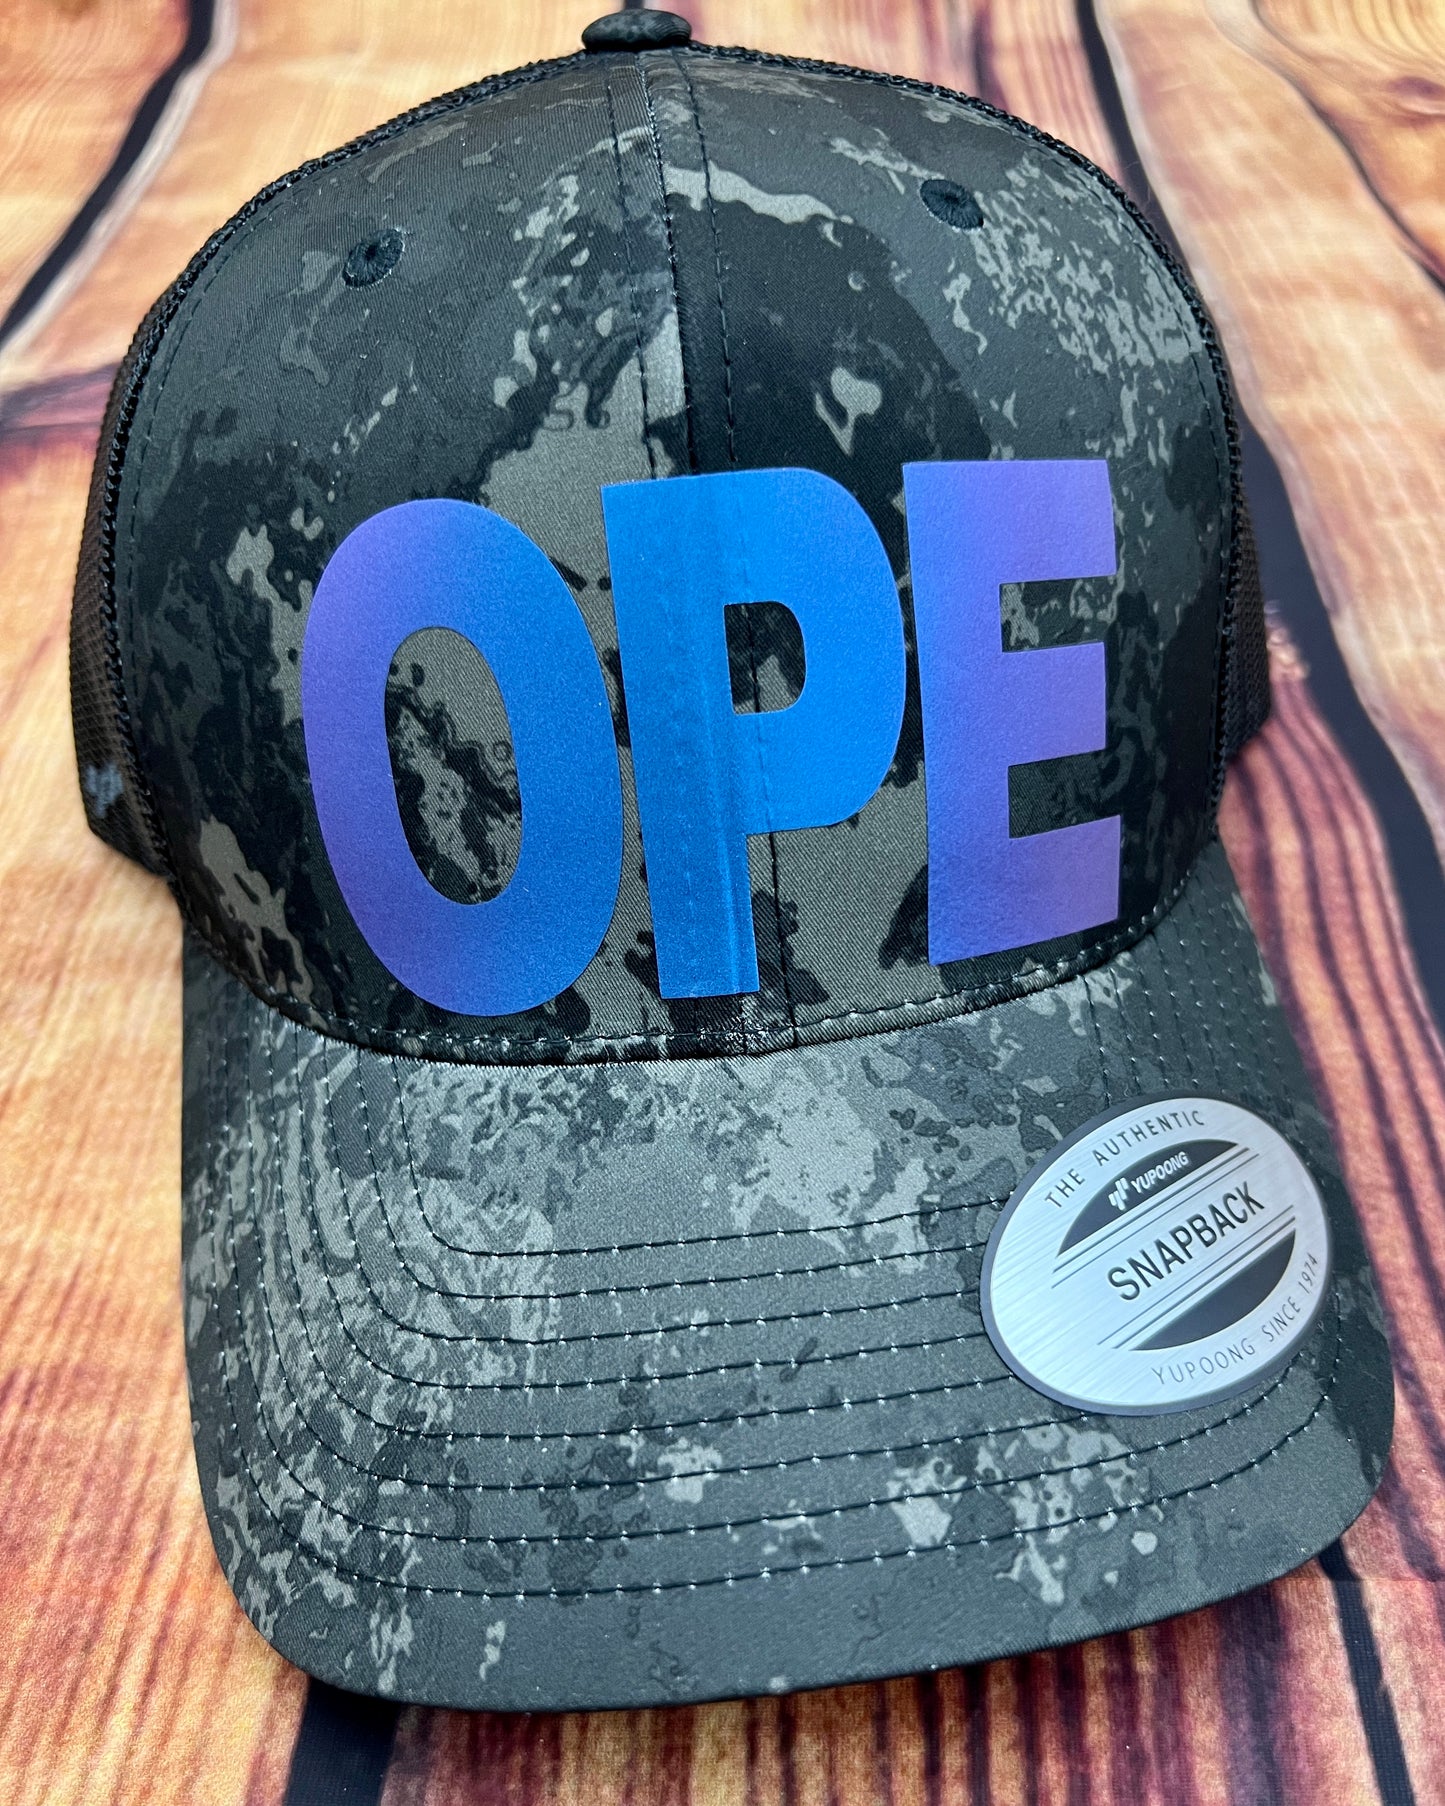 Ope Snapback Hat